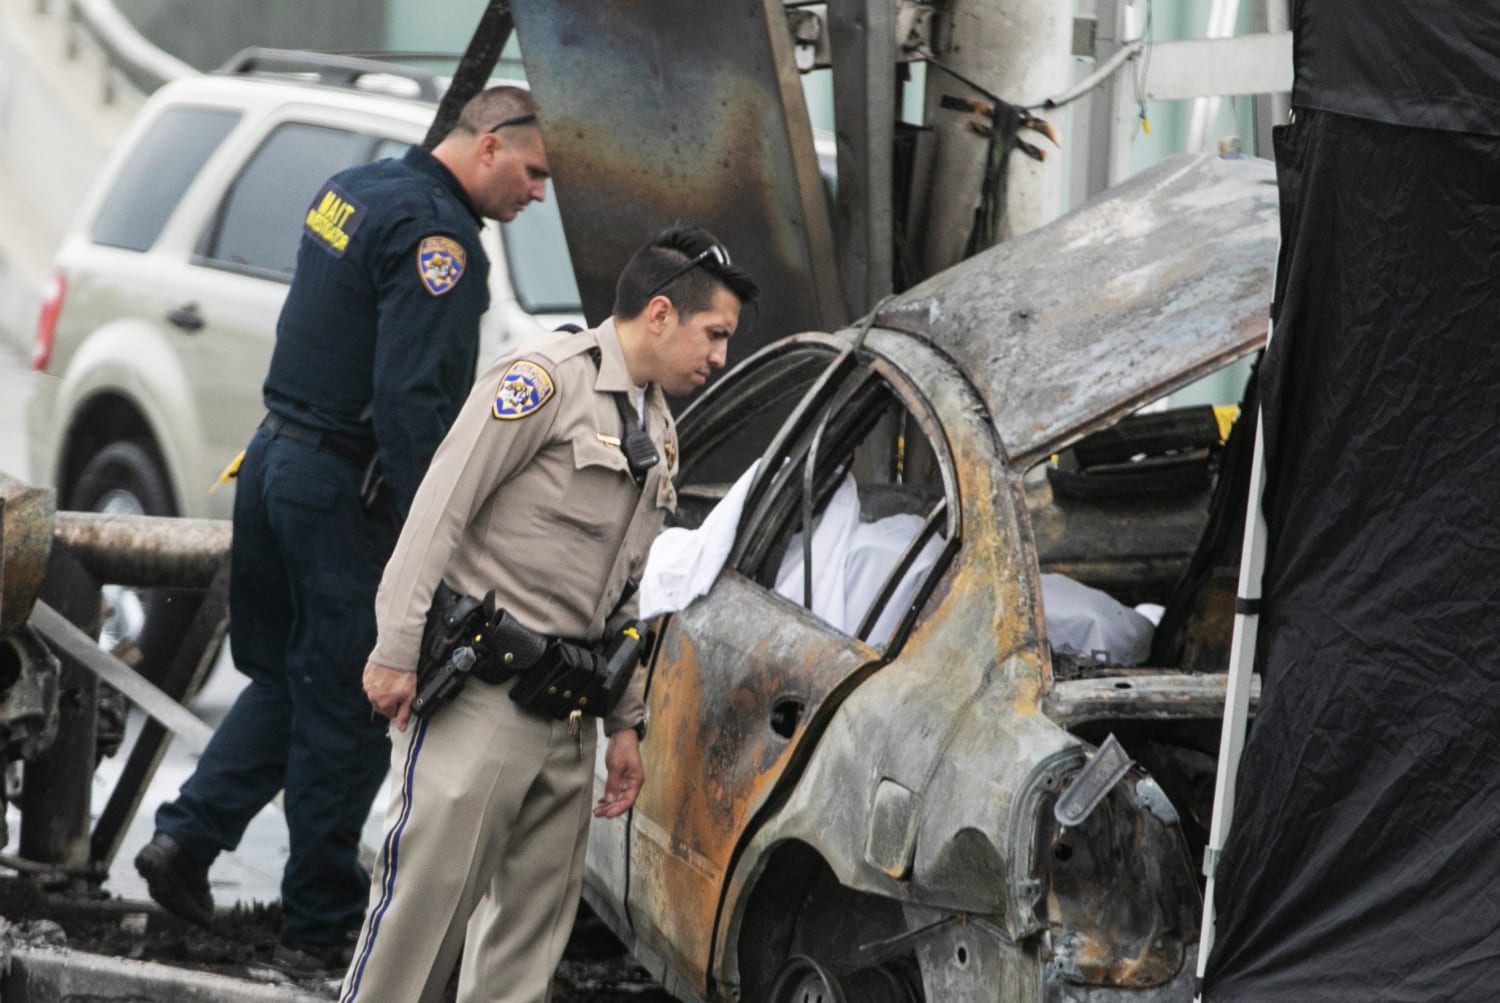 2023 California Car Accident Statistics - Traffic Fatalities CA